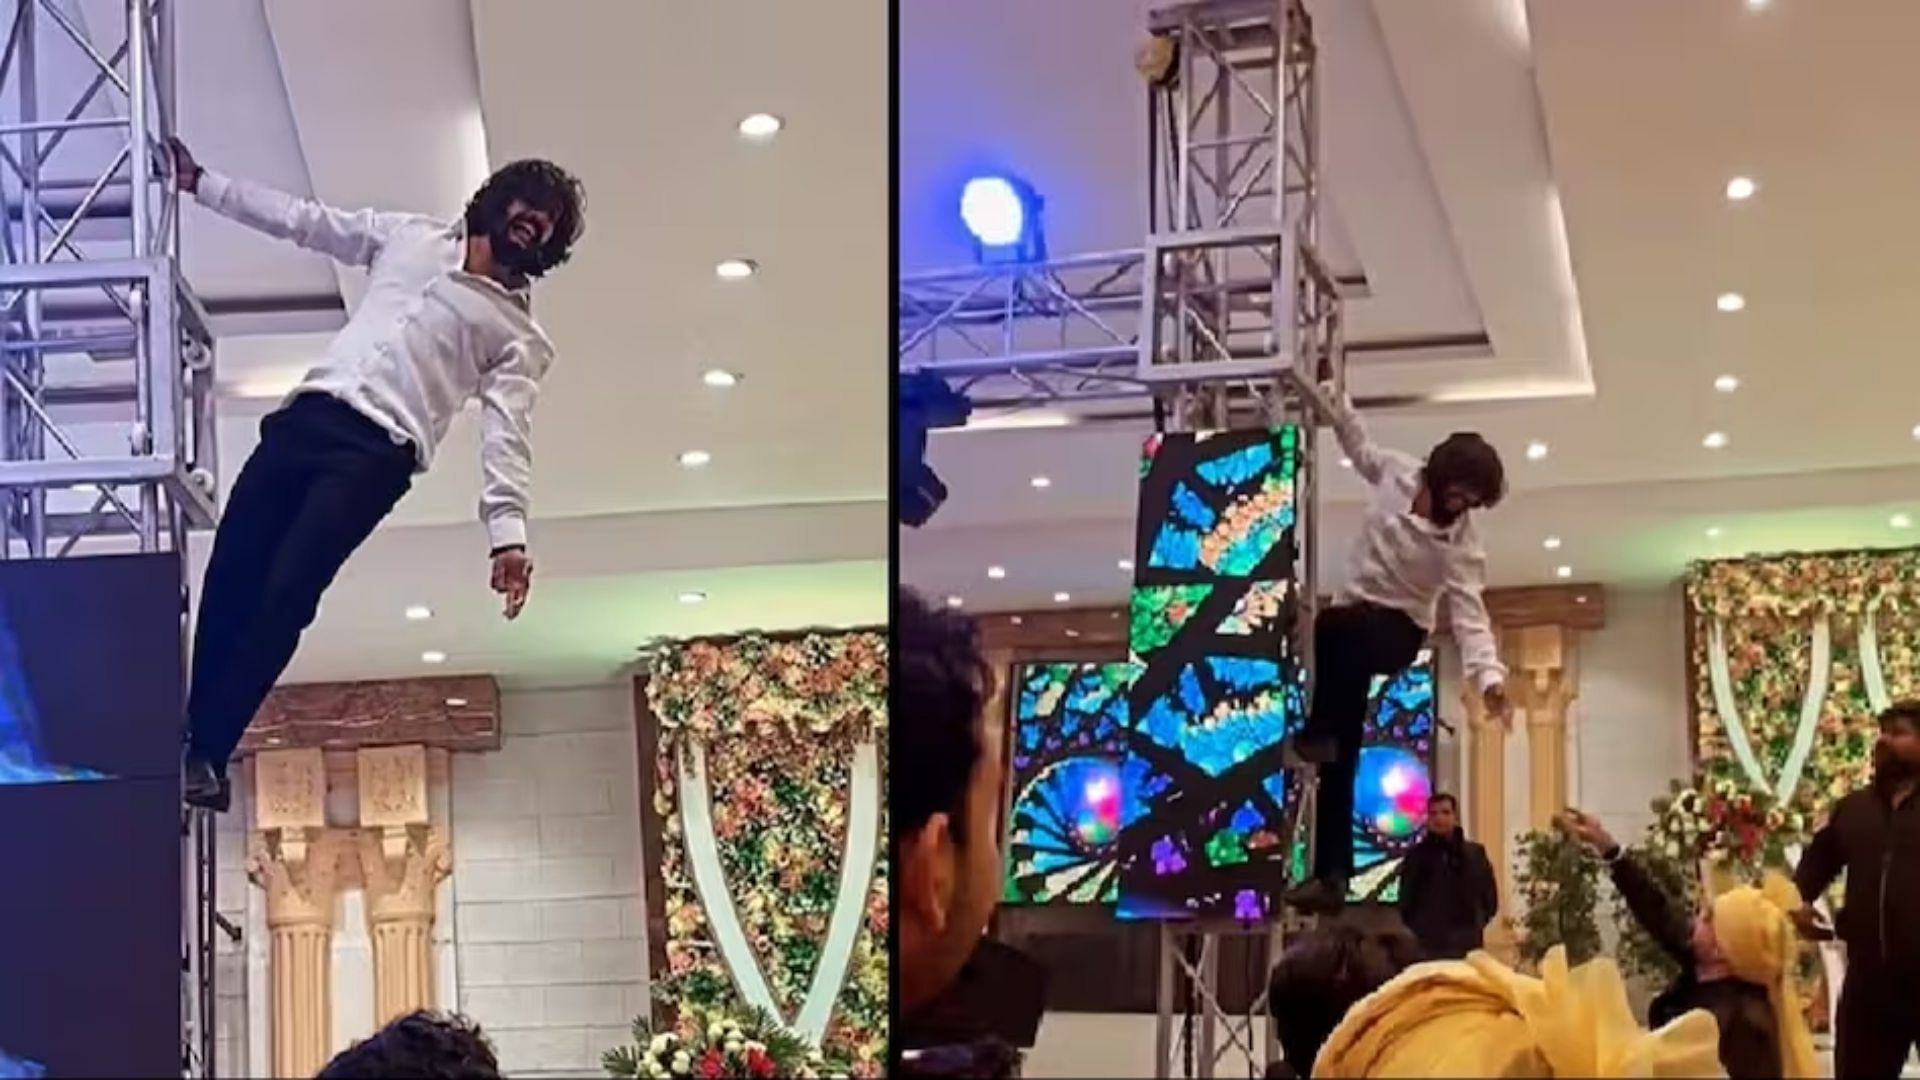 Dance Video: man dances in friends wedding on pillar on jumma chumma song video Goes Viral on Social Media